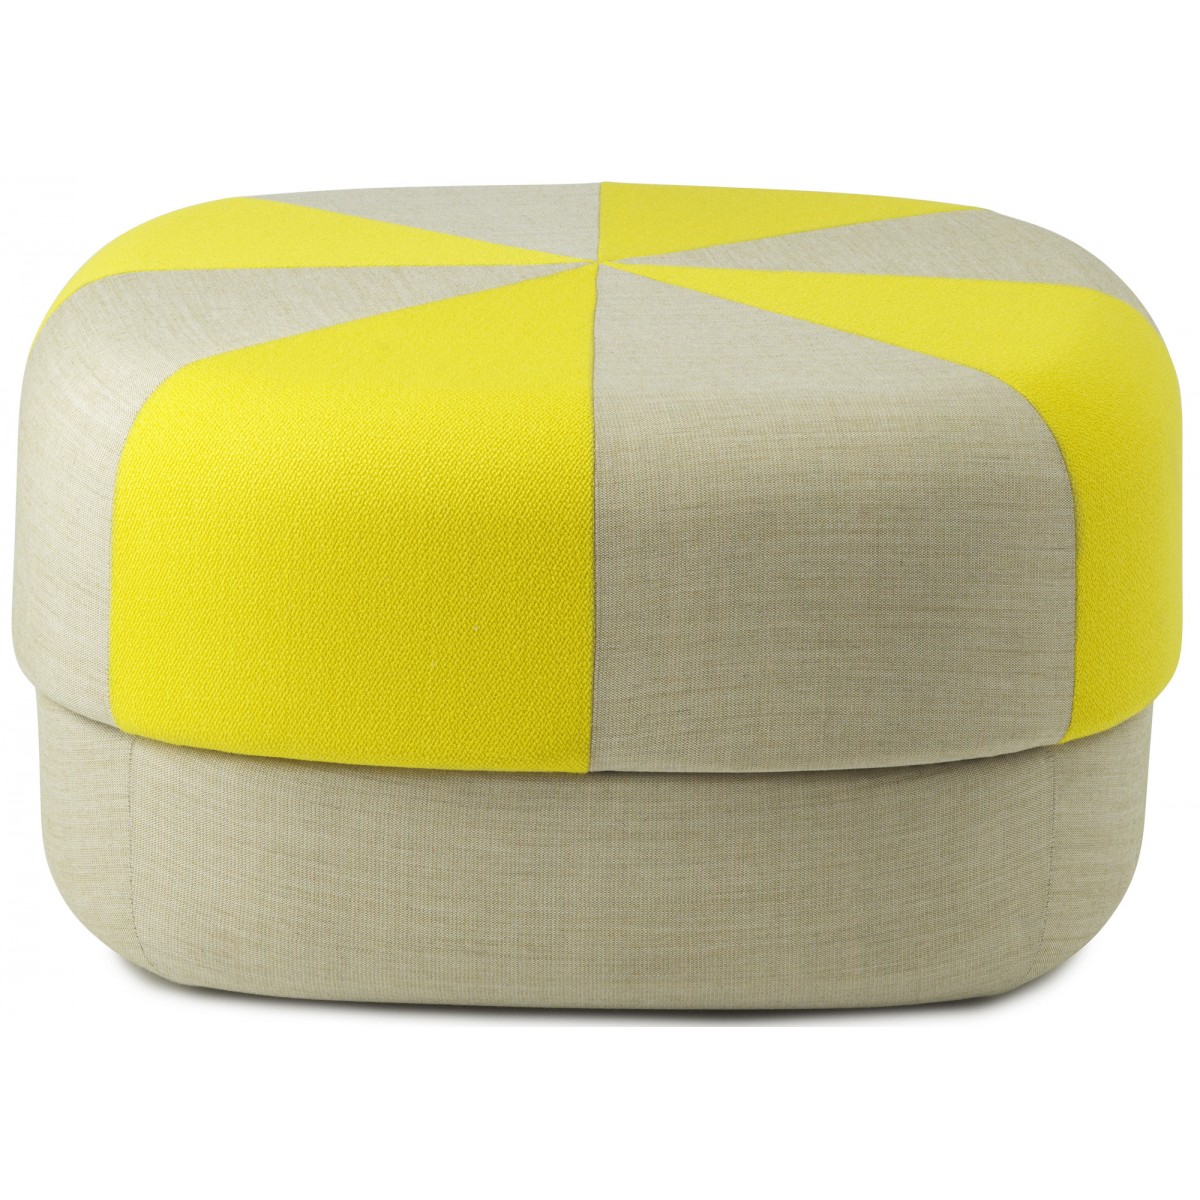 large - yellow - Circus pouf